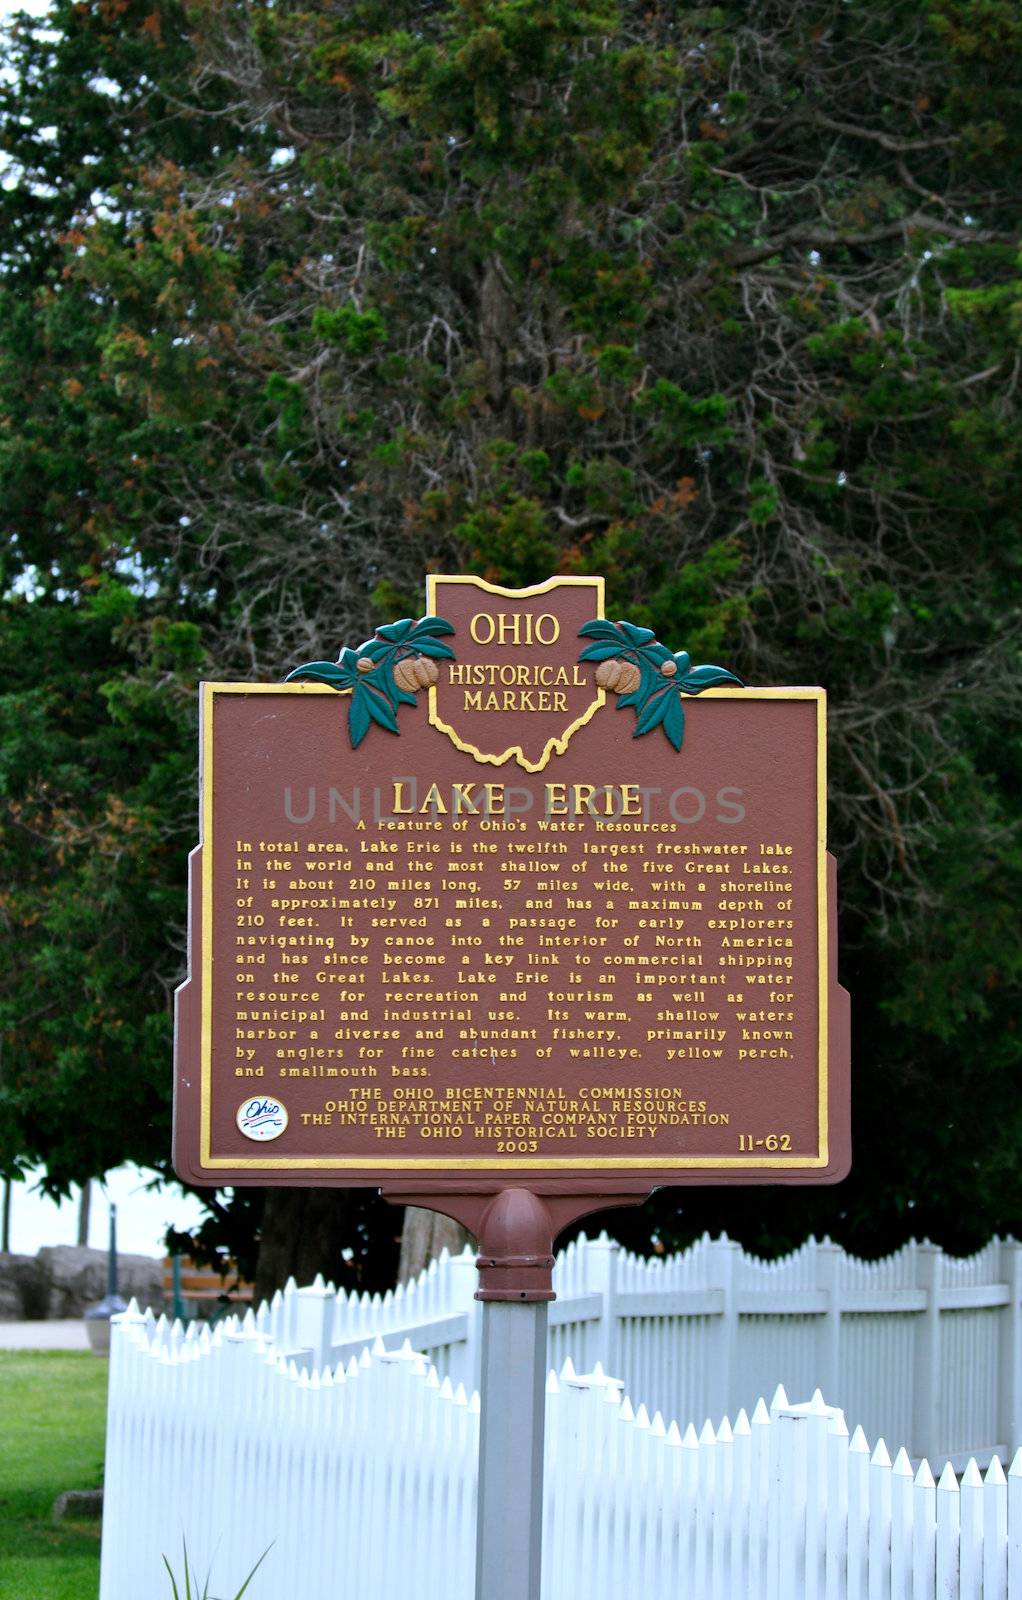 Lake Erie - Ohio Historical Marker